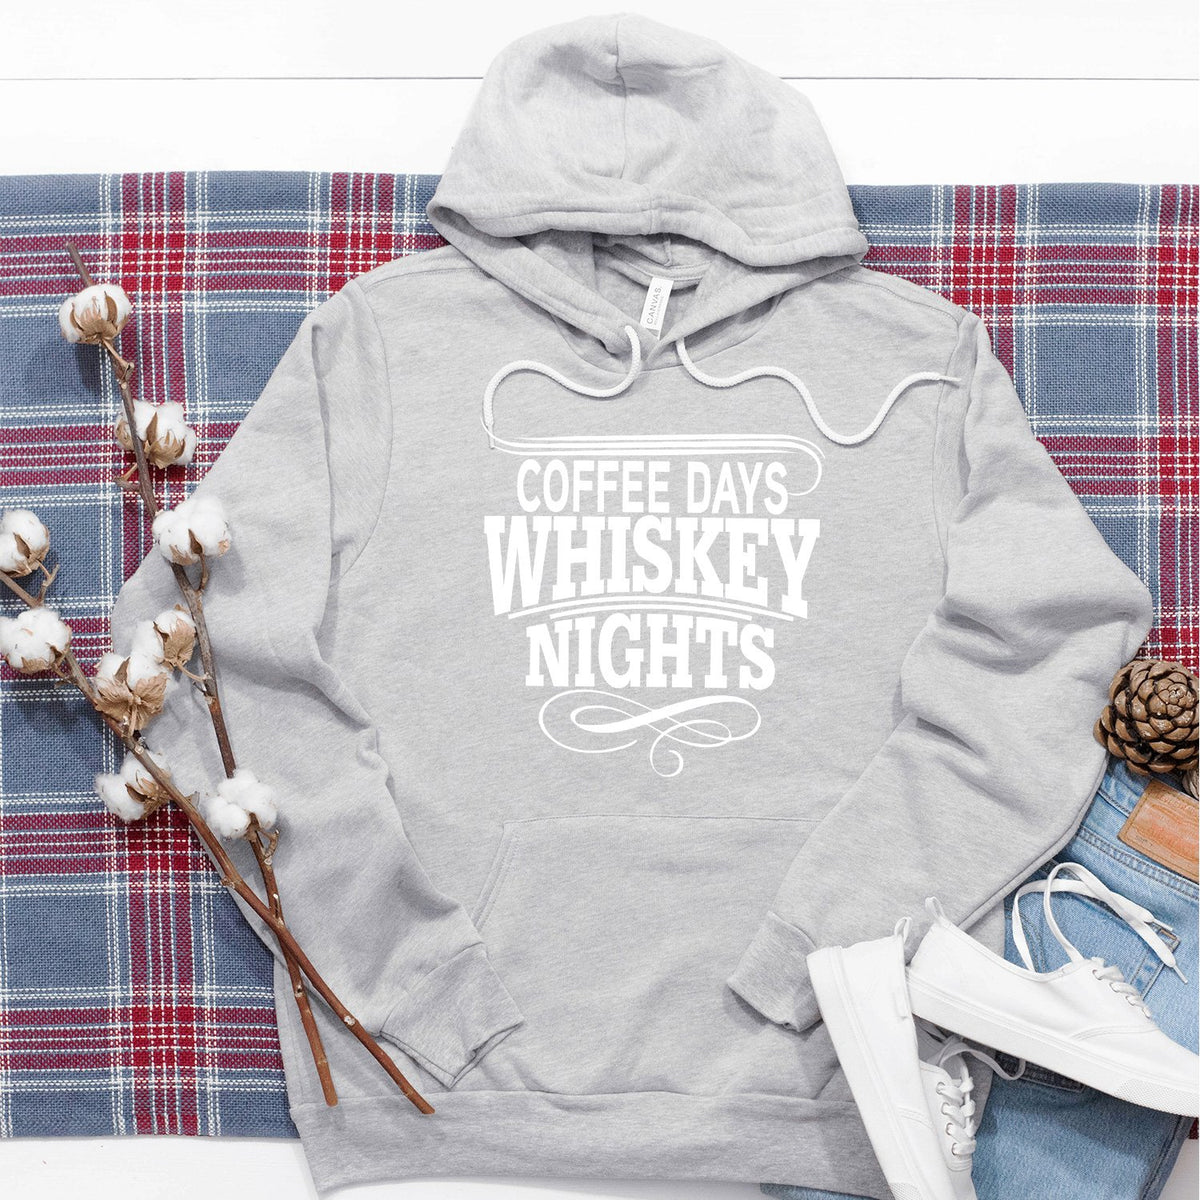 Coffee Days Whiskey Nights - Hoodie Sweatshirt